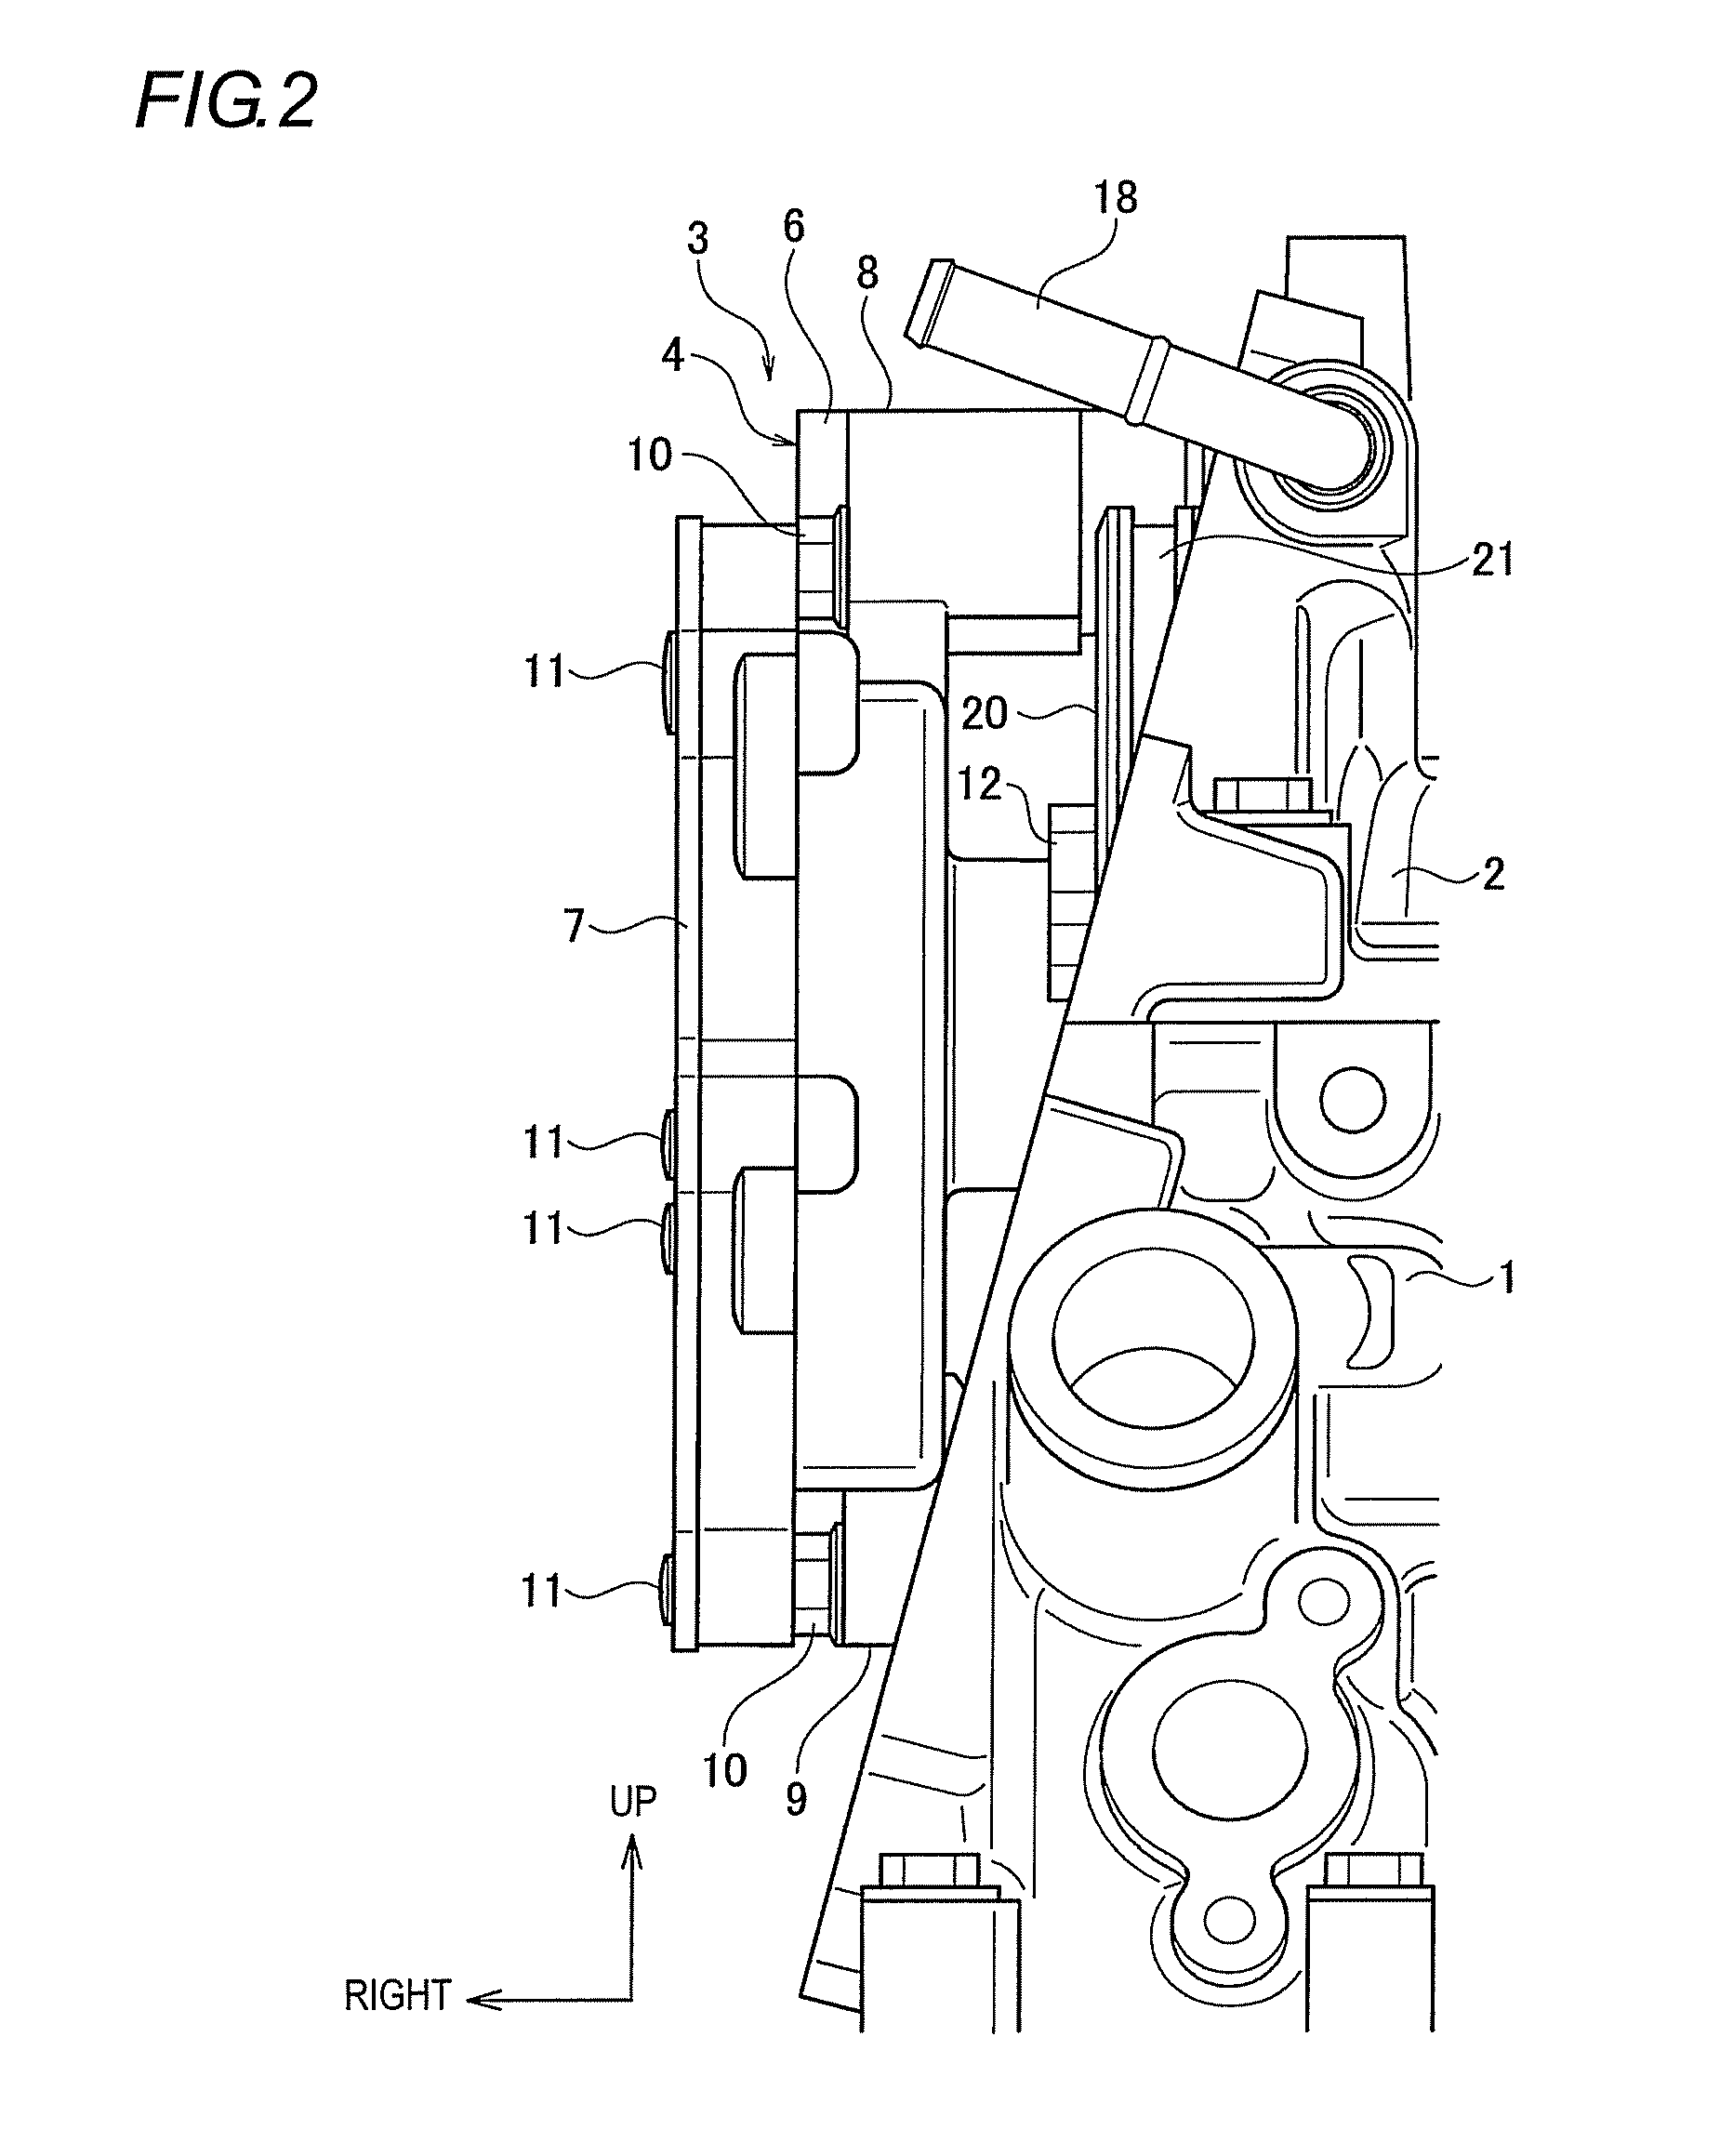 Vacuum pump mounting structure